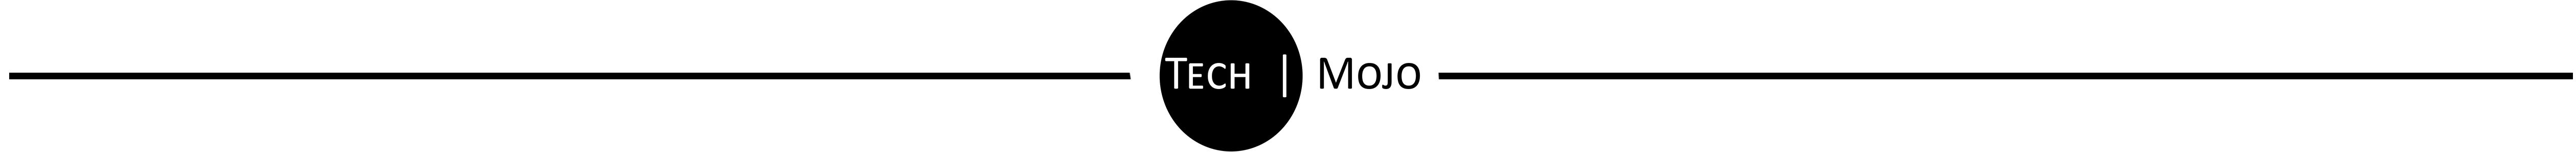 tech mojo logo large steemit.jpg